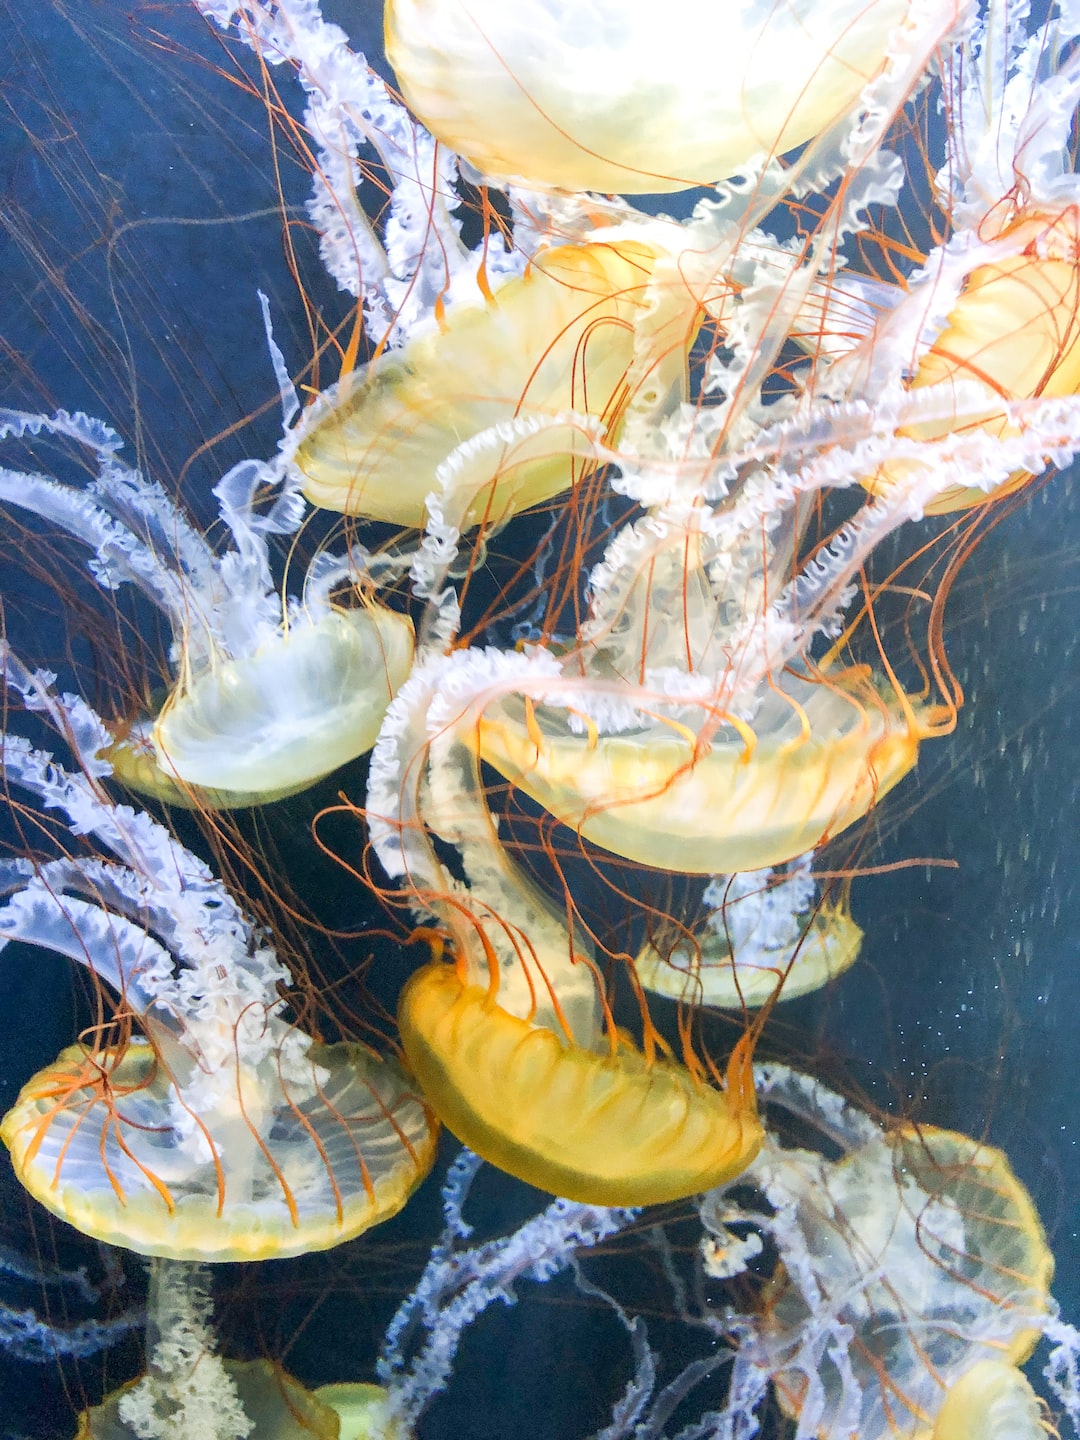 22 Interessante Fakten zu Aquarium Nach Maß